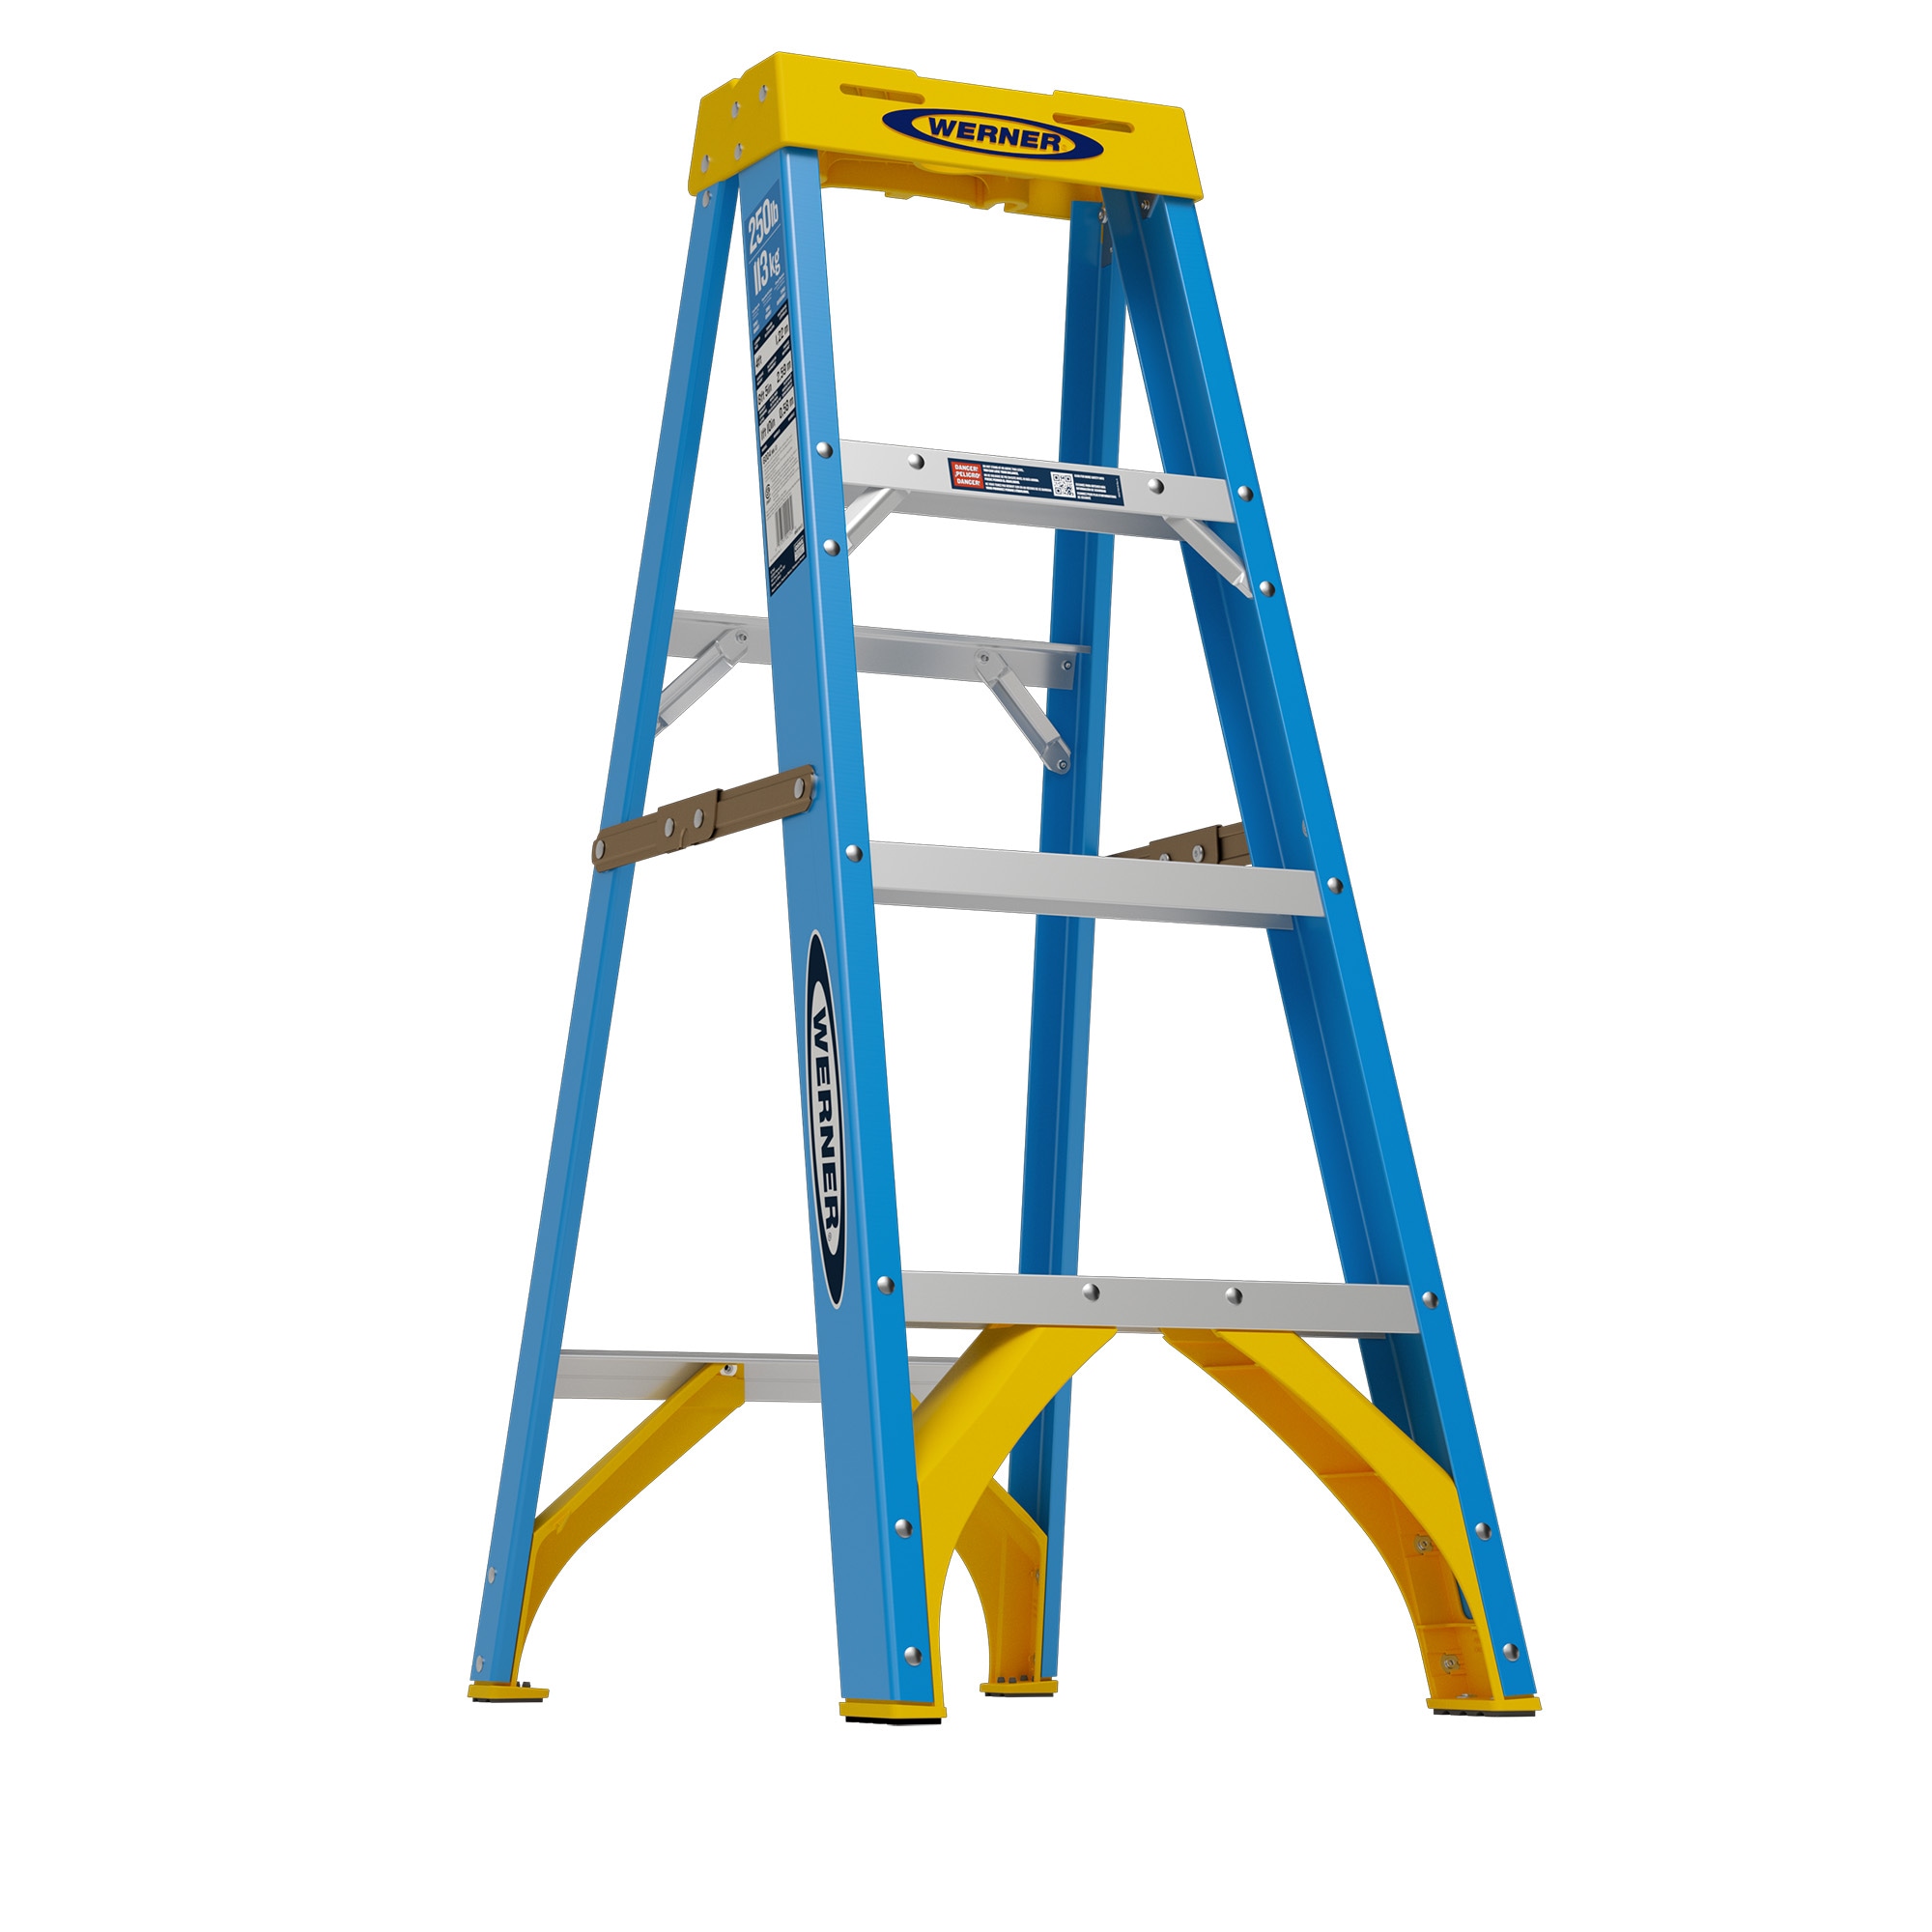 6-Foot Fiberglass Step Ladder, 250 Pound Capacity 